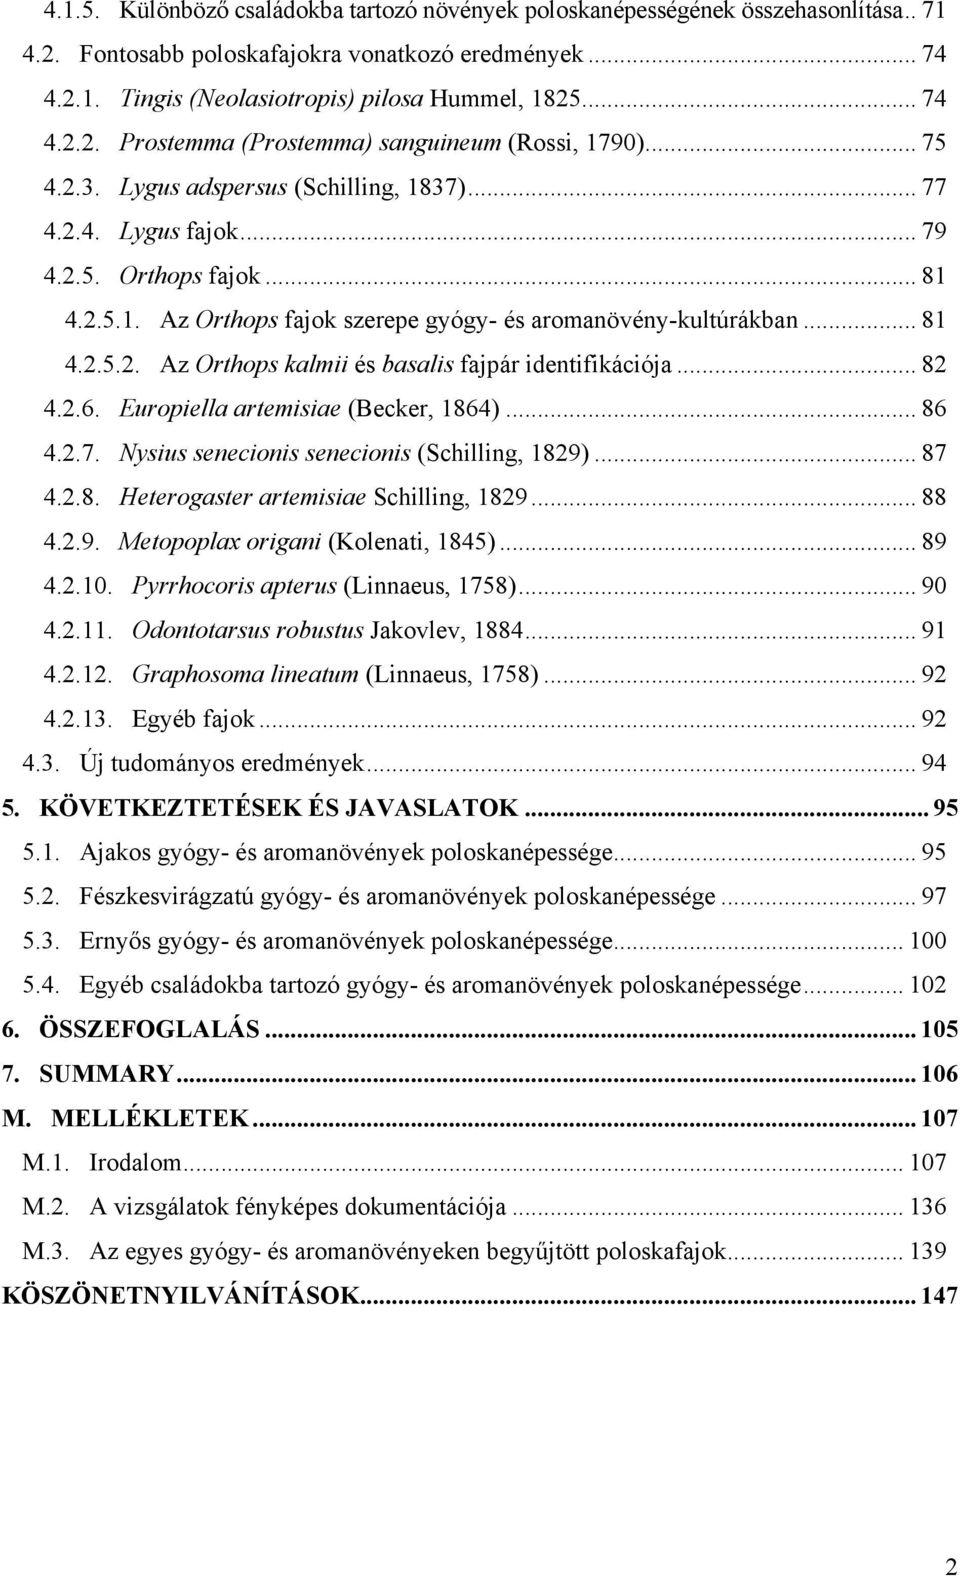 .. 81 4.2.5.2. Az Orthops kalmii és basalis fajpár identifikációja... 82 4.2.6. Europiella artemisiae (Becker, 1864)... 86 4.2.7. Nysius senecionis senecionis (Schilling, 1829)... 87 4.2.8. Heterogaster artemisiae Schilling, 1829.